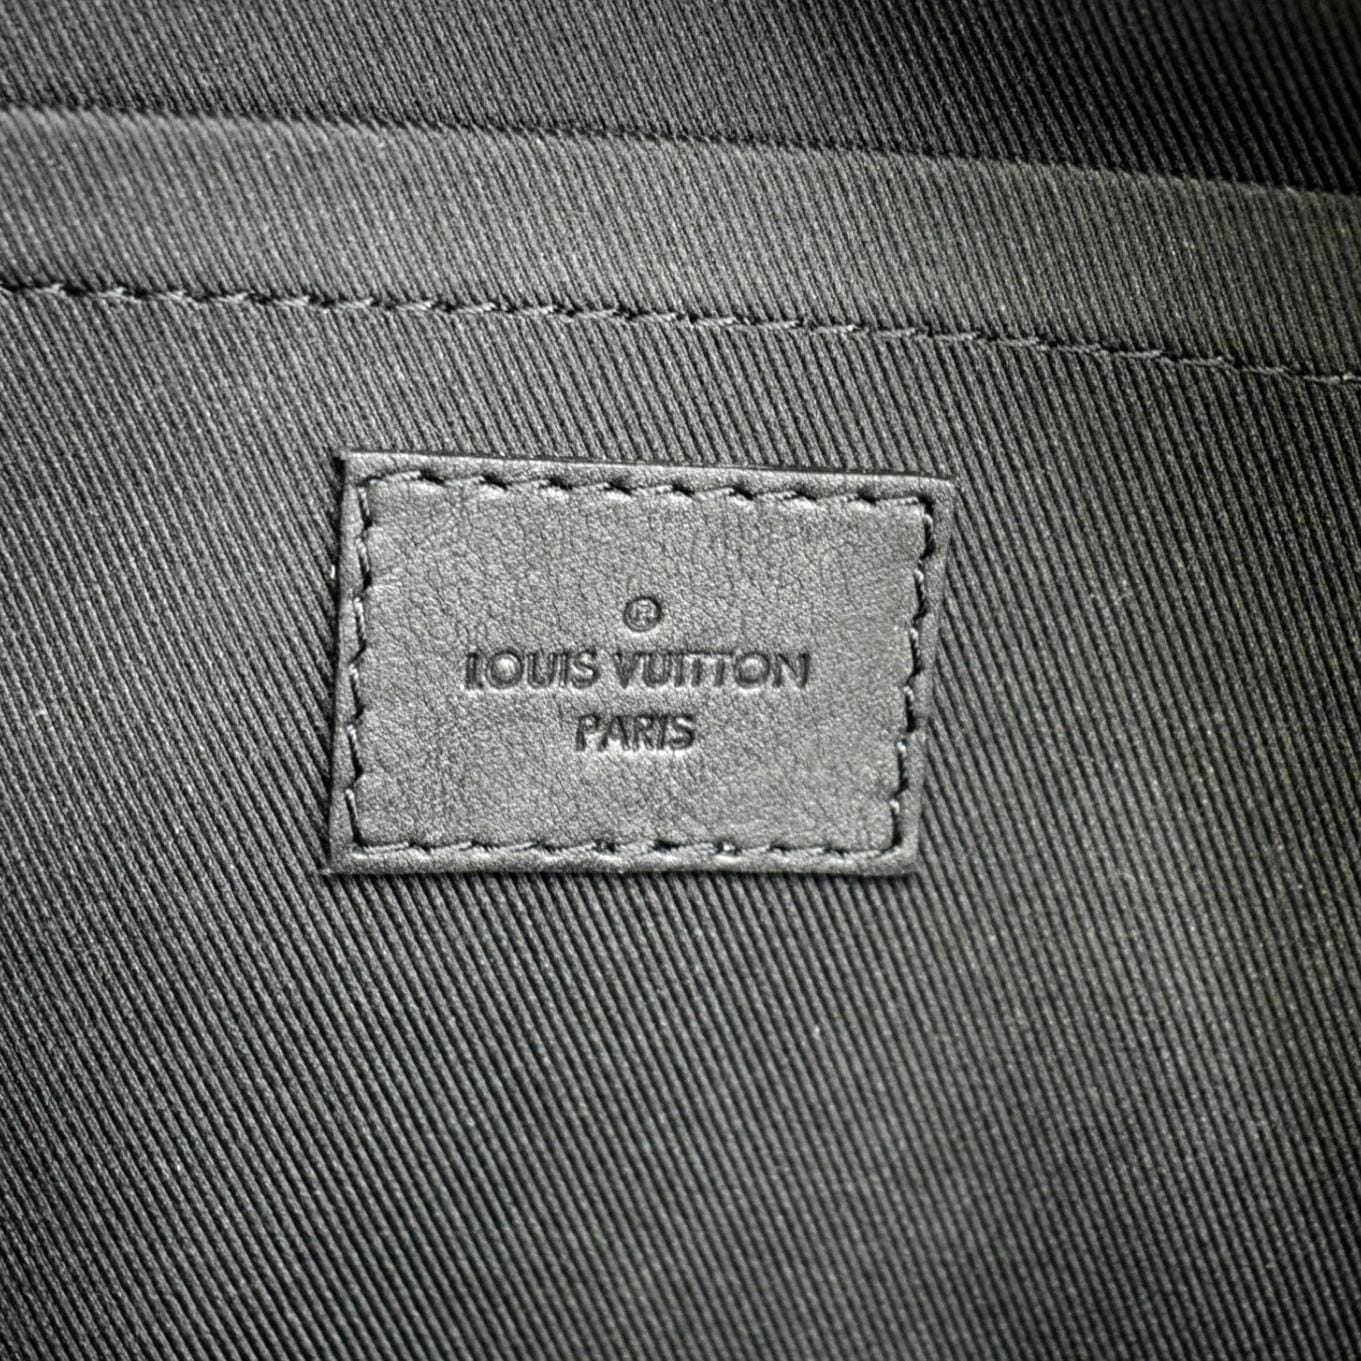 Authenticated Used LOUIS VUITTON Louis Vuitton Palm Springs Backpack MINI  Rucksack Shoulder Bag Crossbody Monogram Reverse Canvas M44872 Brown 